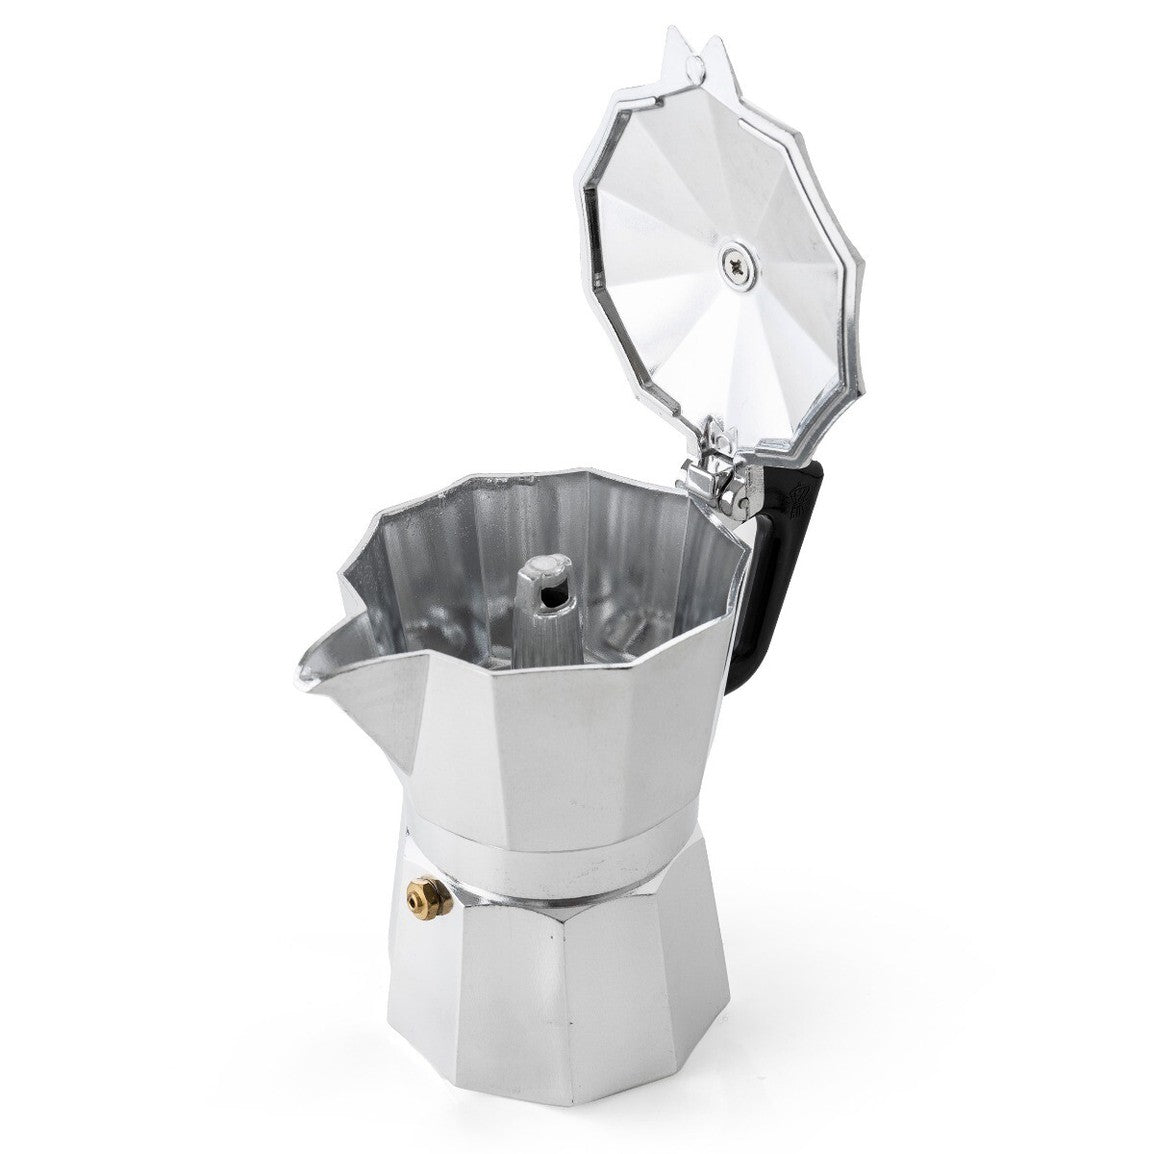 Pezzetti Italexpress Aluminium Moka Pot - 3 Cup